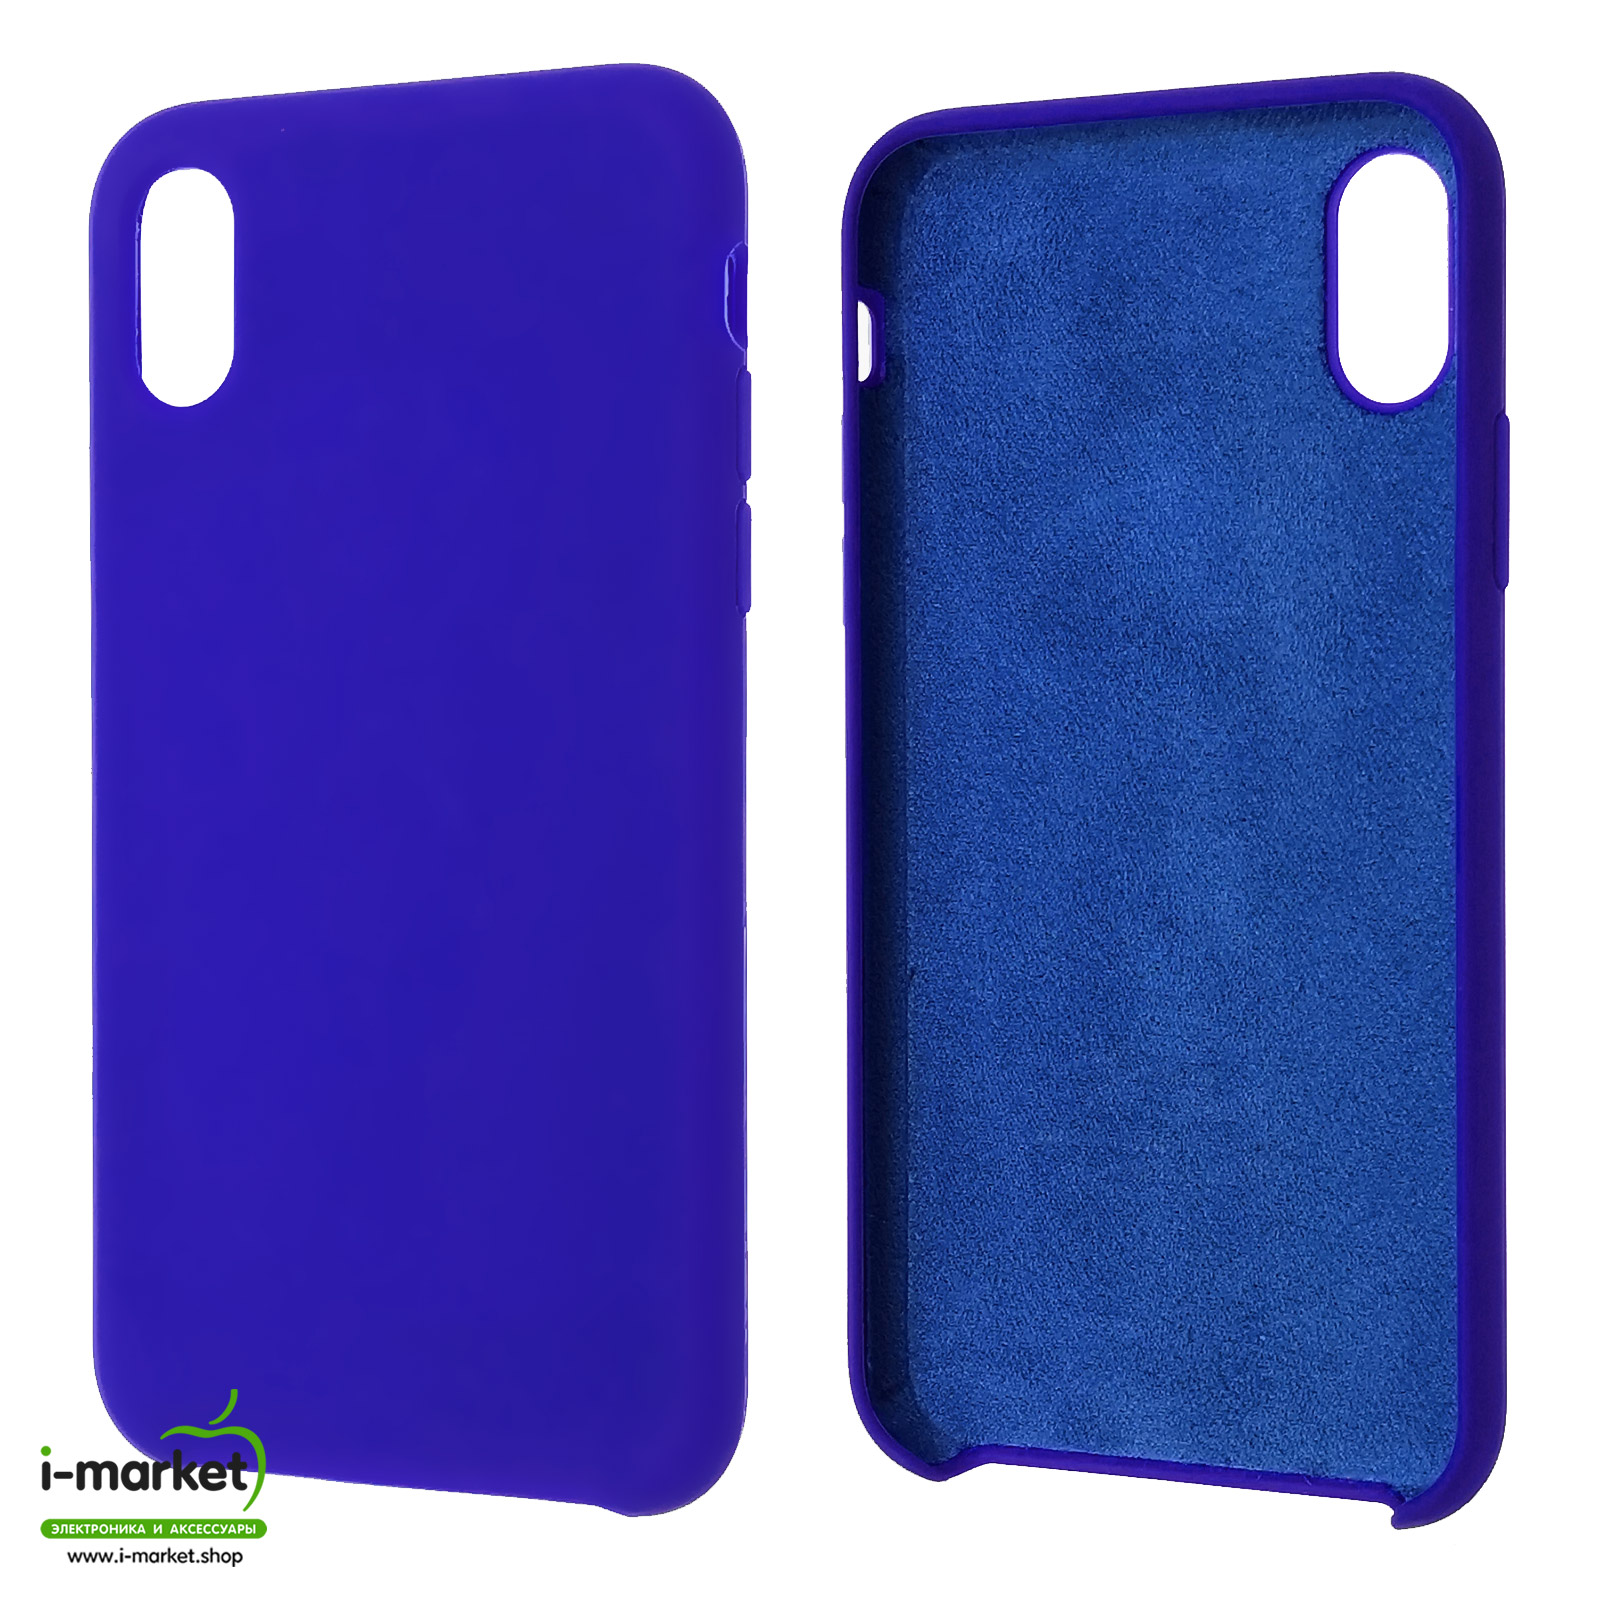 Чехол накладка Silicon Case для APPLE iPhone X, iPhone XS, силикон, бархат, цвет ярко синий